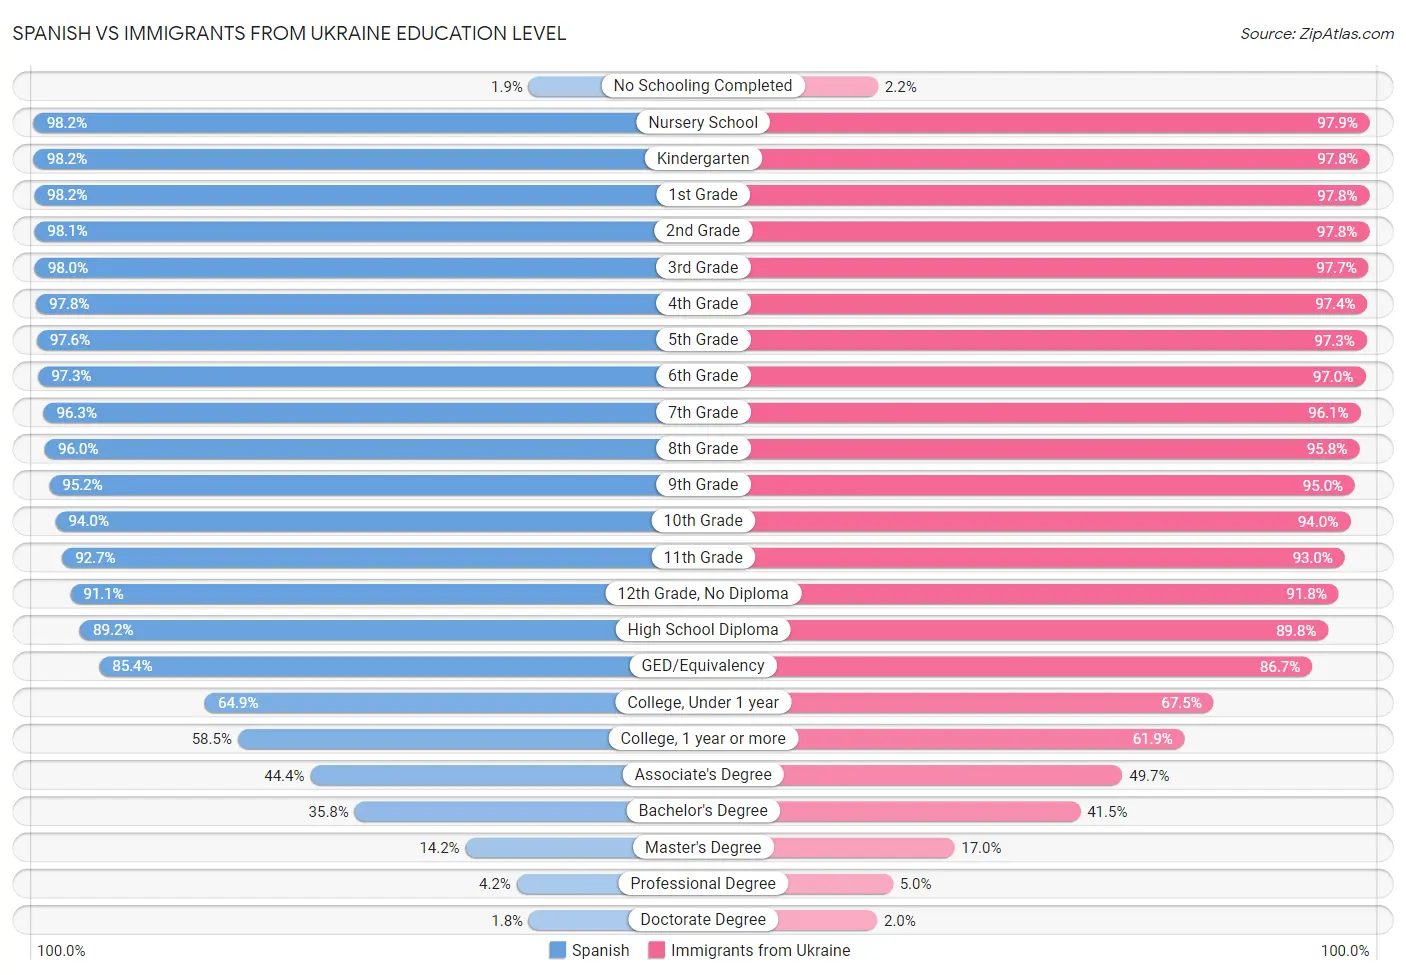 Spanish vs Immigrants from Ukraine Education Level